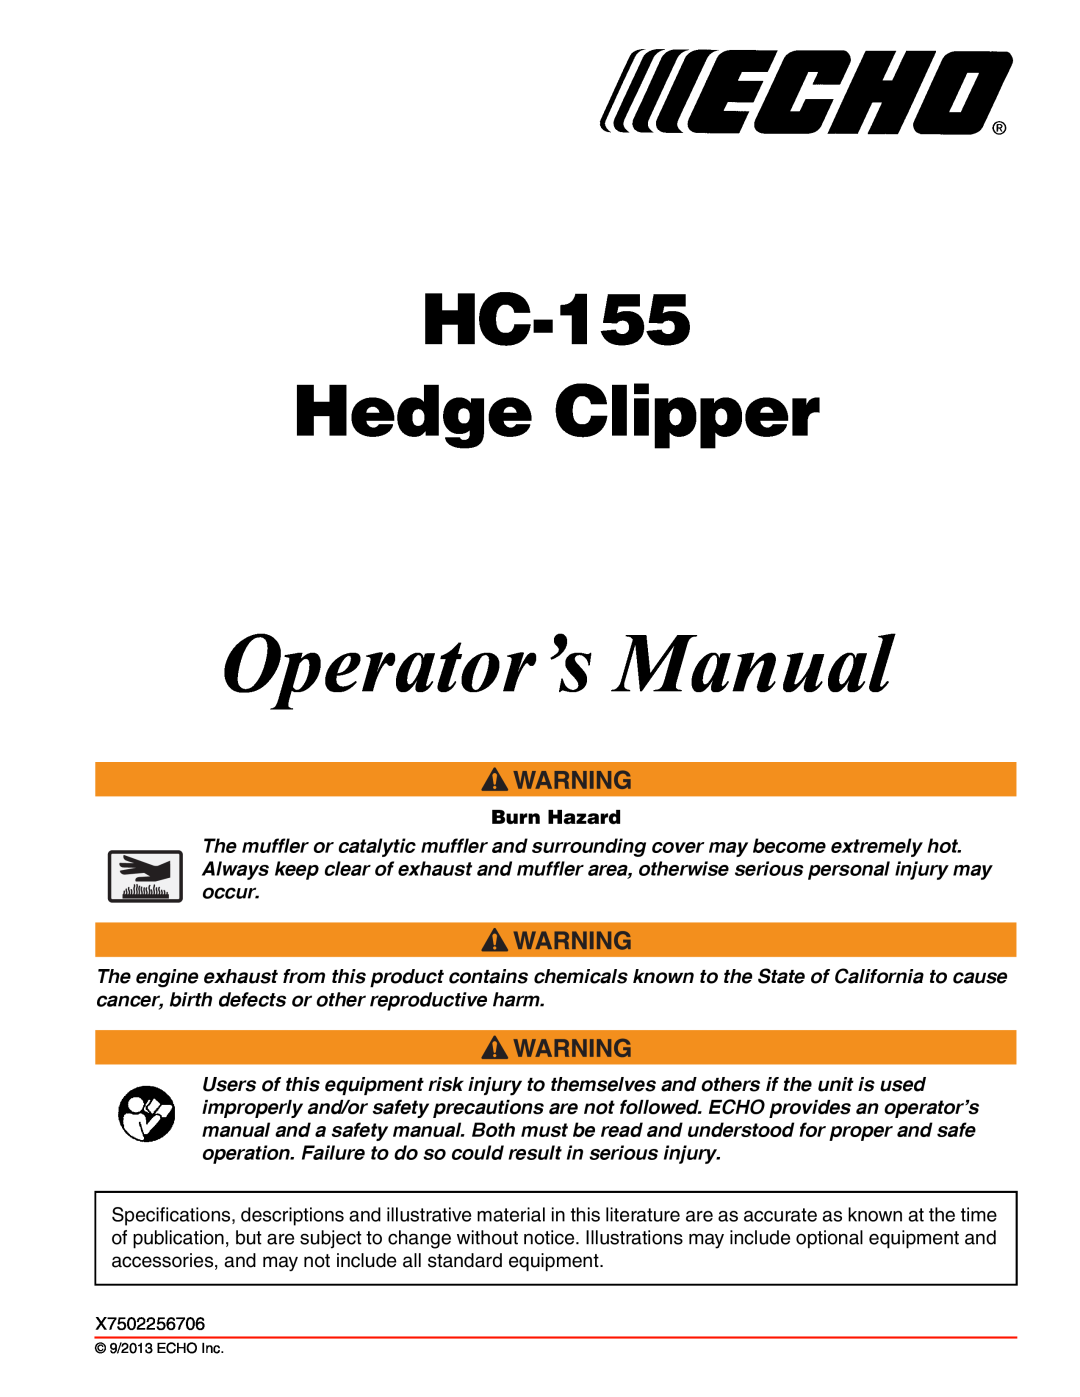 Echo specifications Burn Hazard, Operator’s Manual, HC-155 Hedge Clipper 